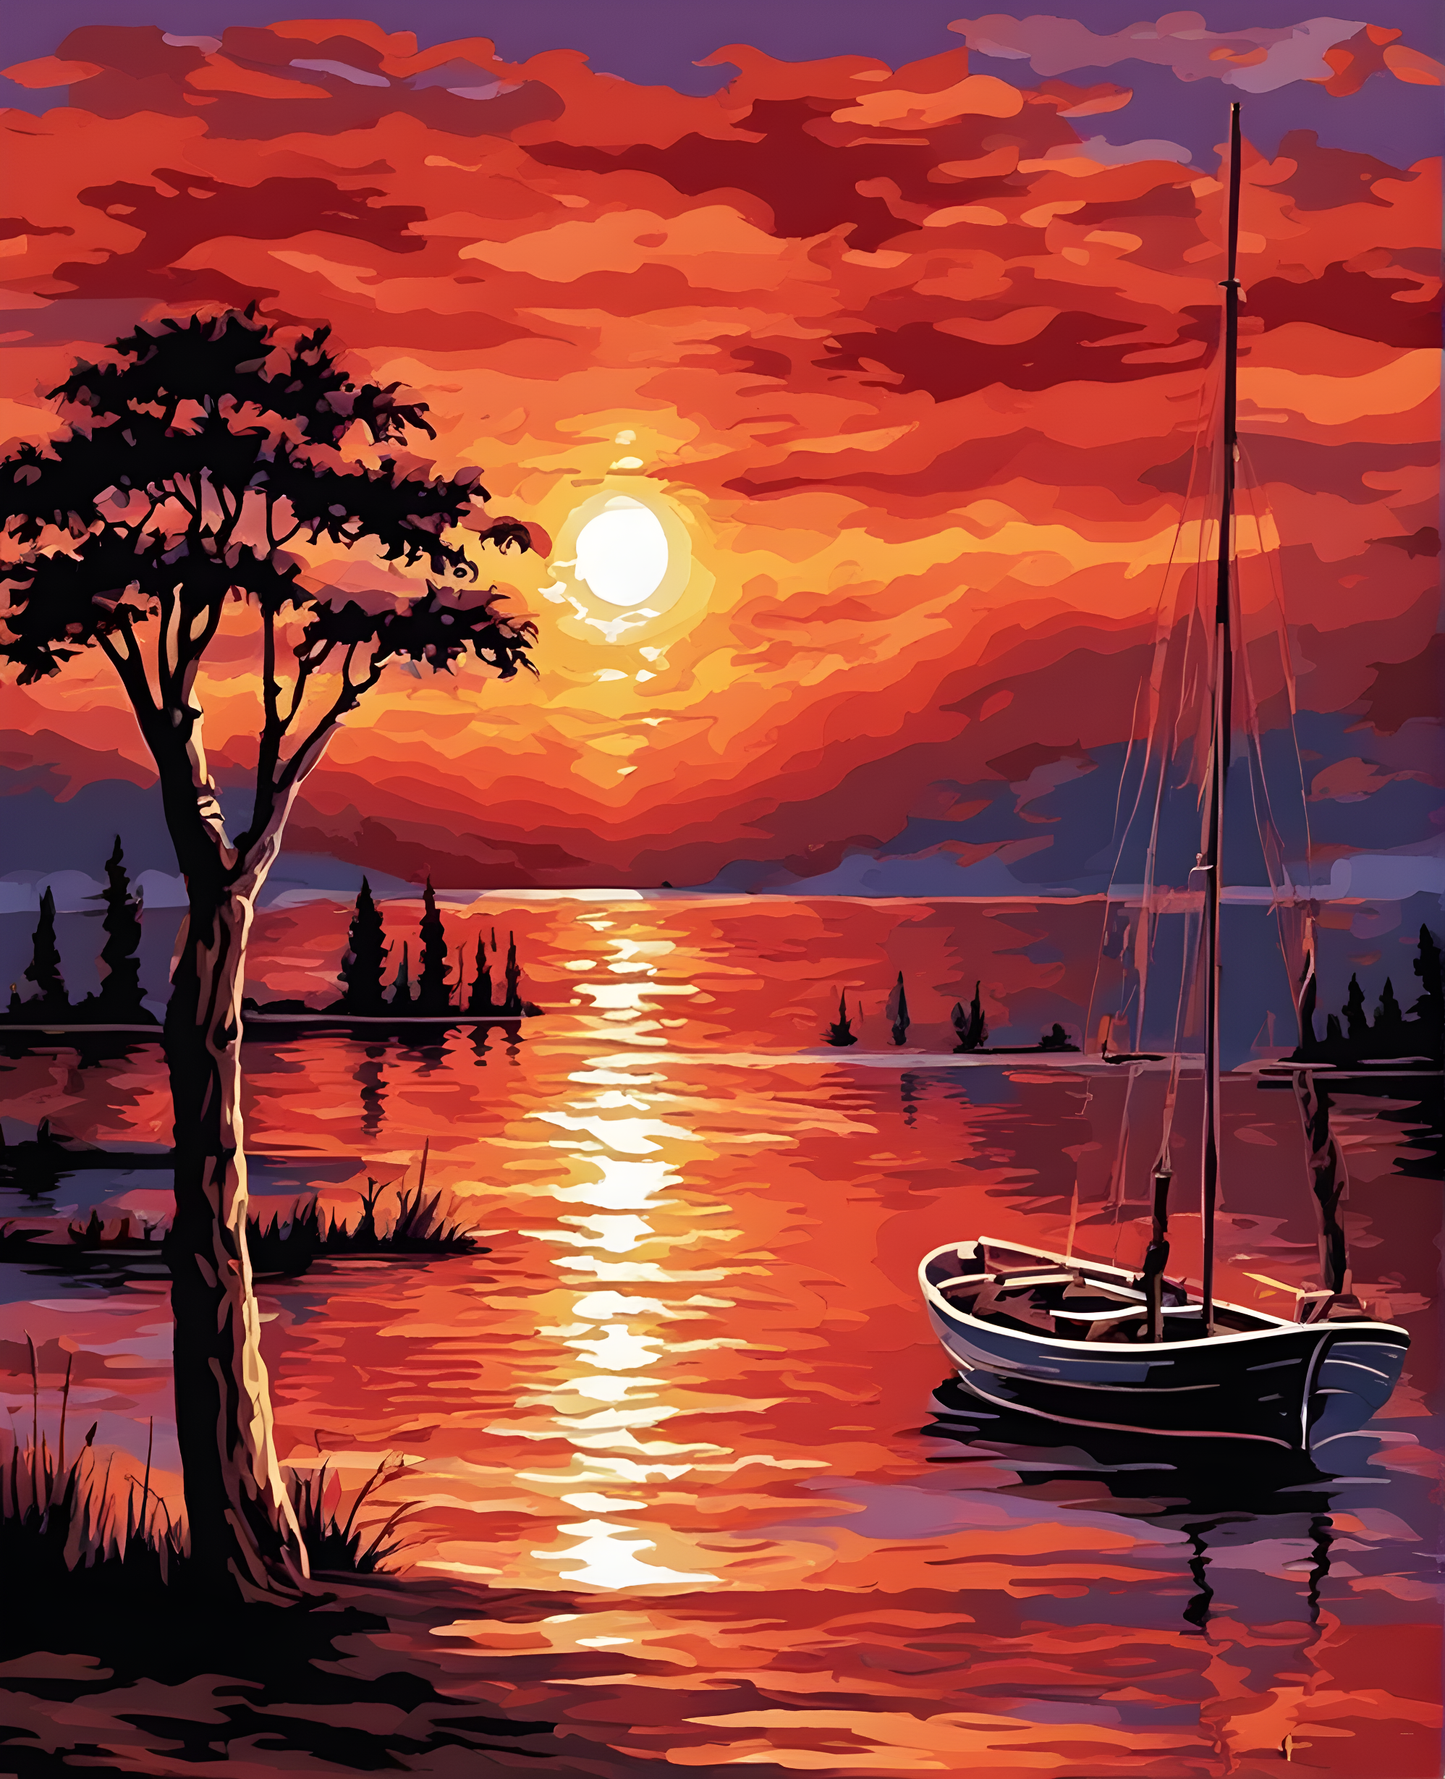 Reddish Sunset (4) - Van-Go Paint-By-Number Kit